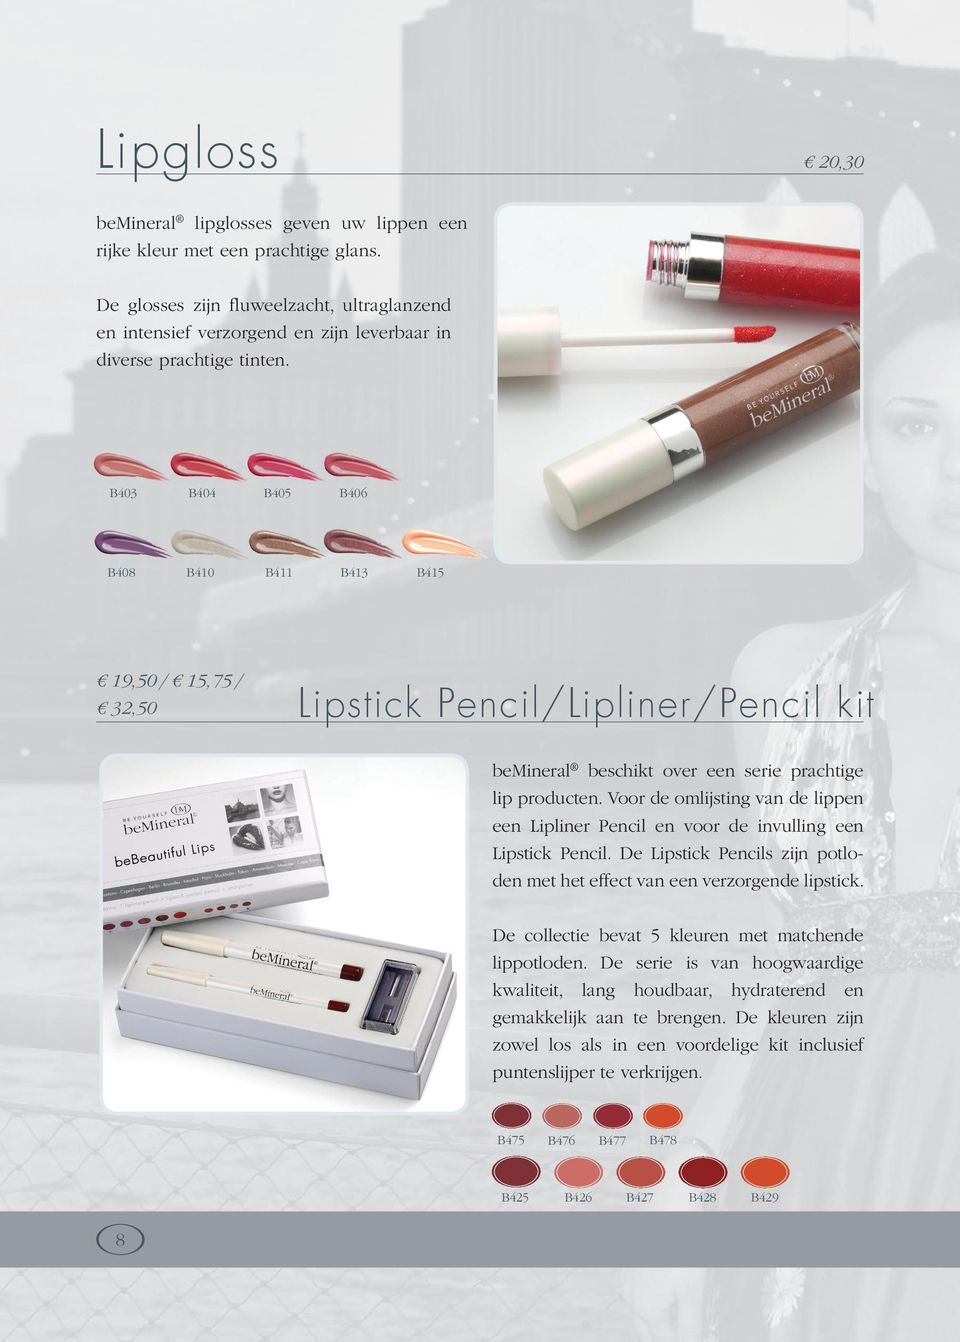 B403 B404 B405 B406 B408 B410 B411 B413 B415 19,50 / 15,75 / 32,50 Lipstick Pencil/Lipliner/Pencil kit bemineral beschikt over een serie prachtige lip producten.